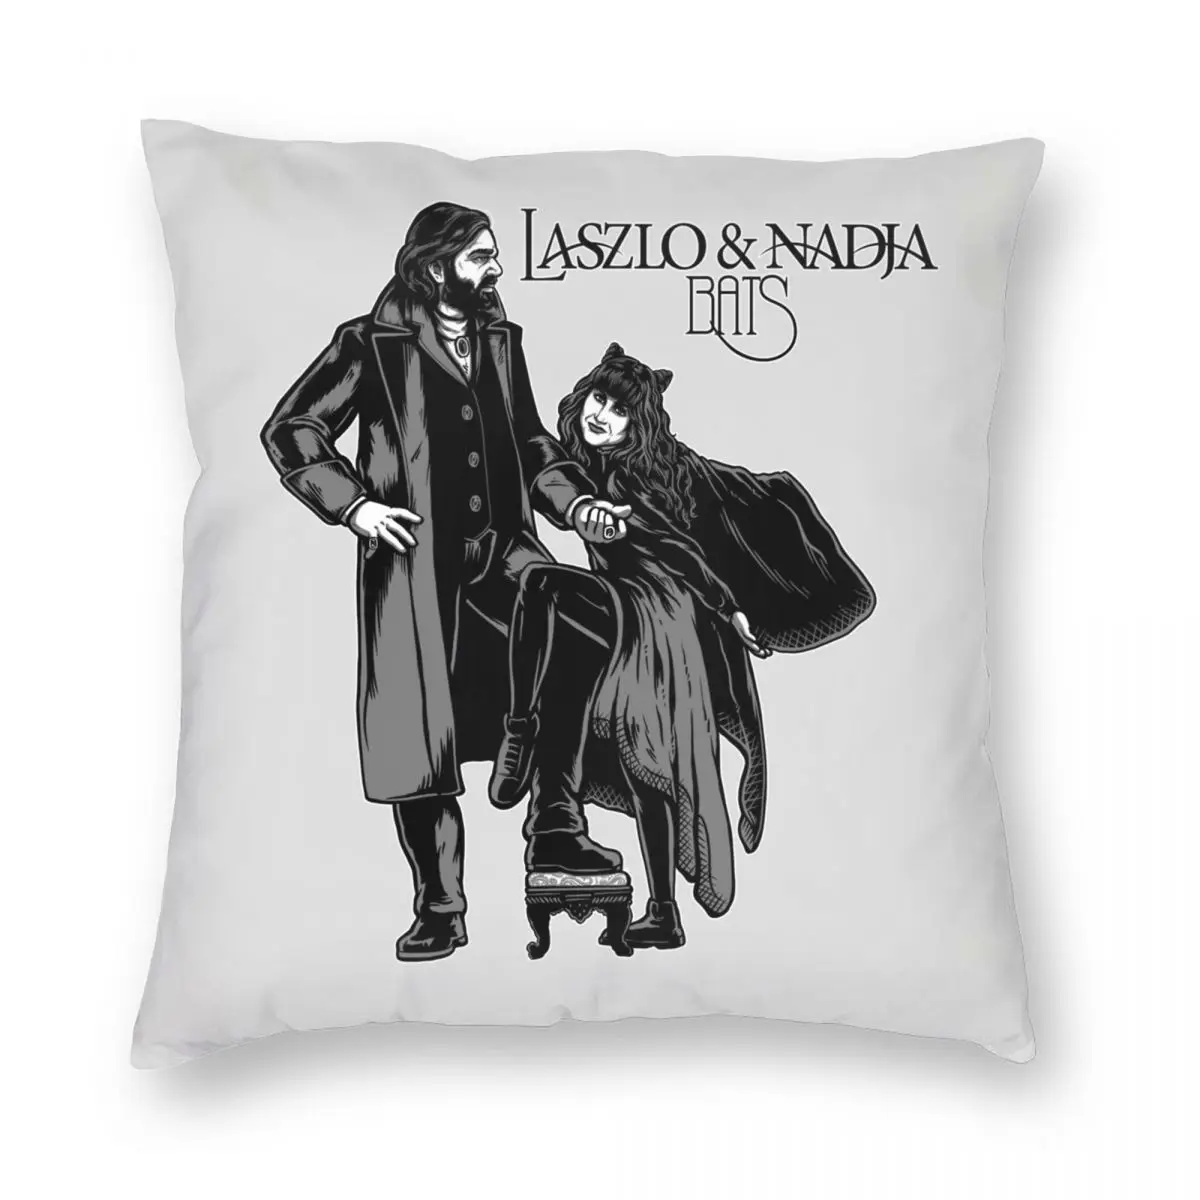 

Laszlo Nadja Album Cover Pillowcase Polyester Linen Velvet Pattern Zip Decor Throw Pillow Case Home Cushion Cover 18"